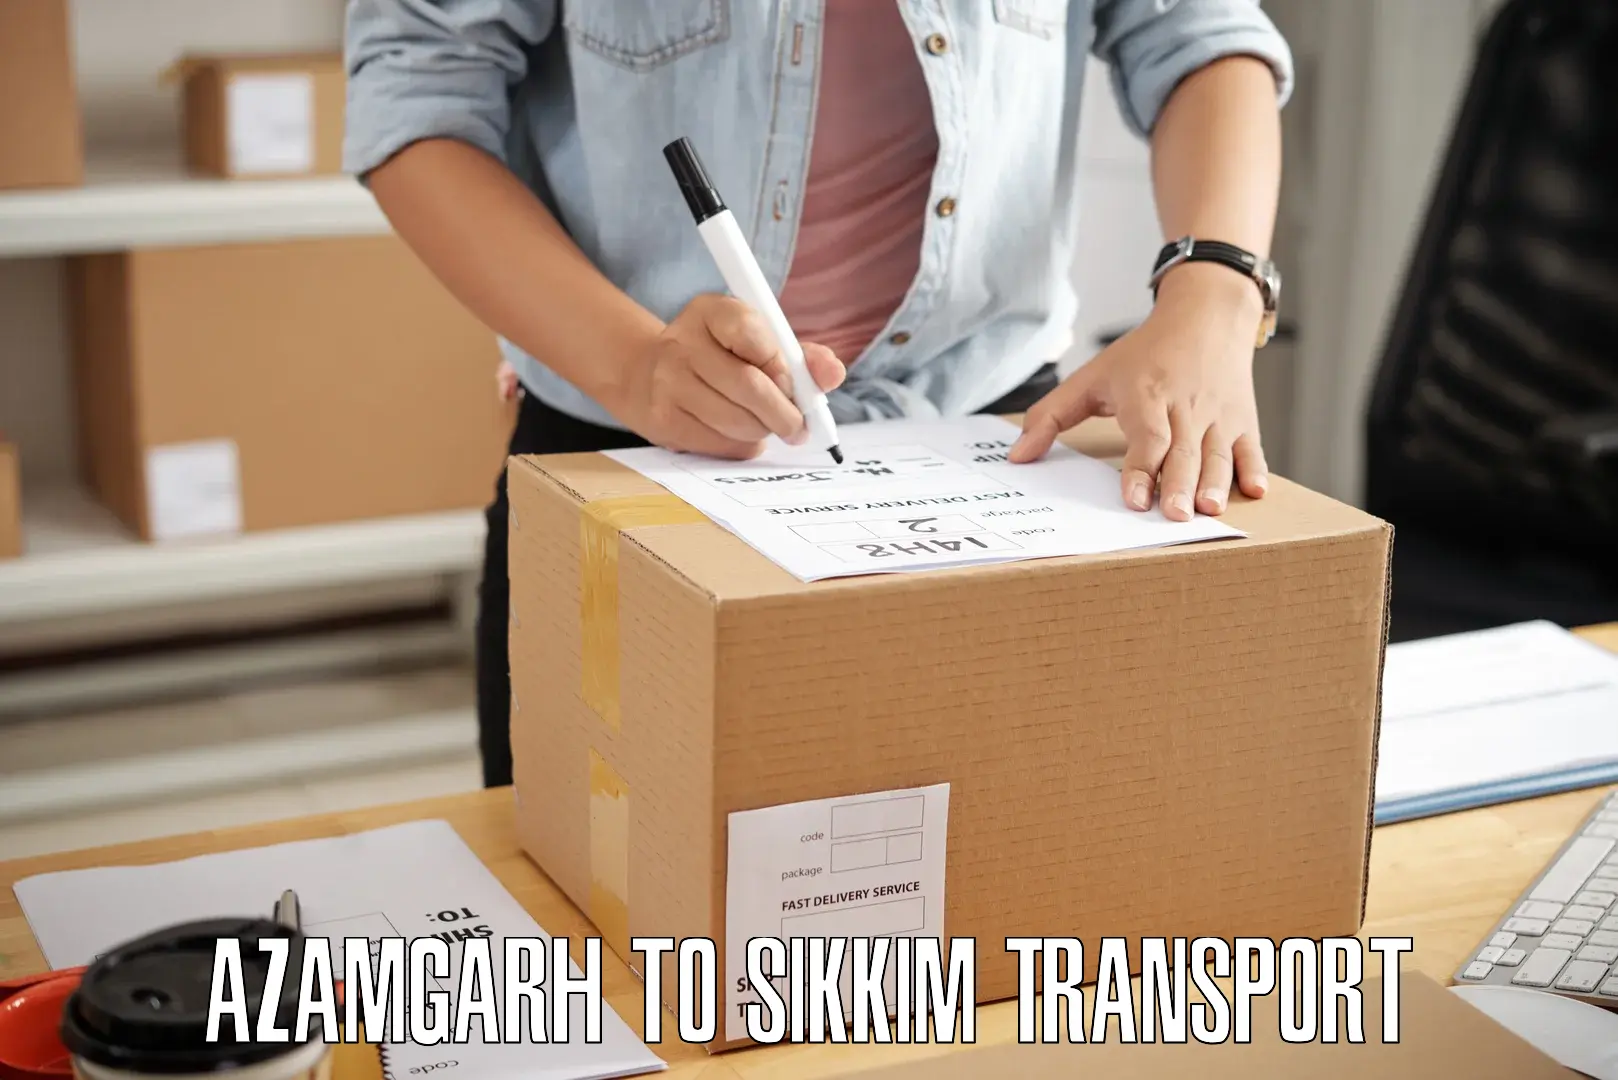 Delivery service Azamgarh to Gangtok